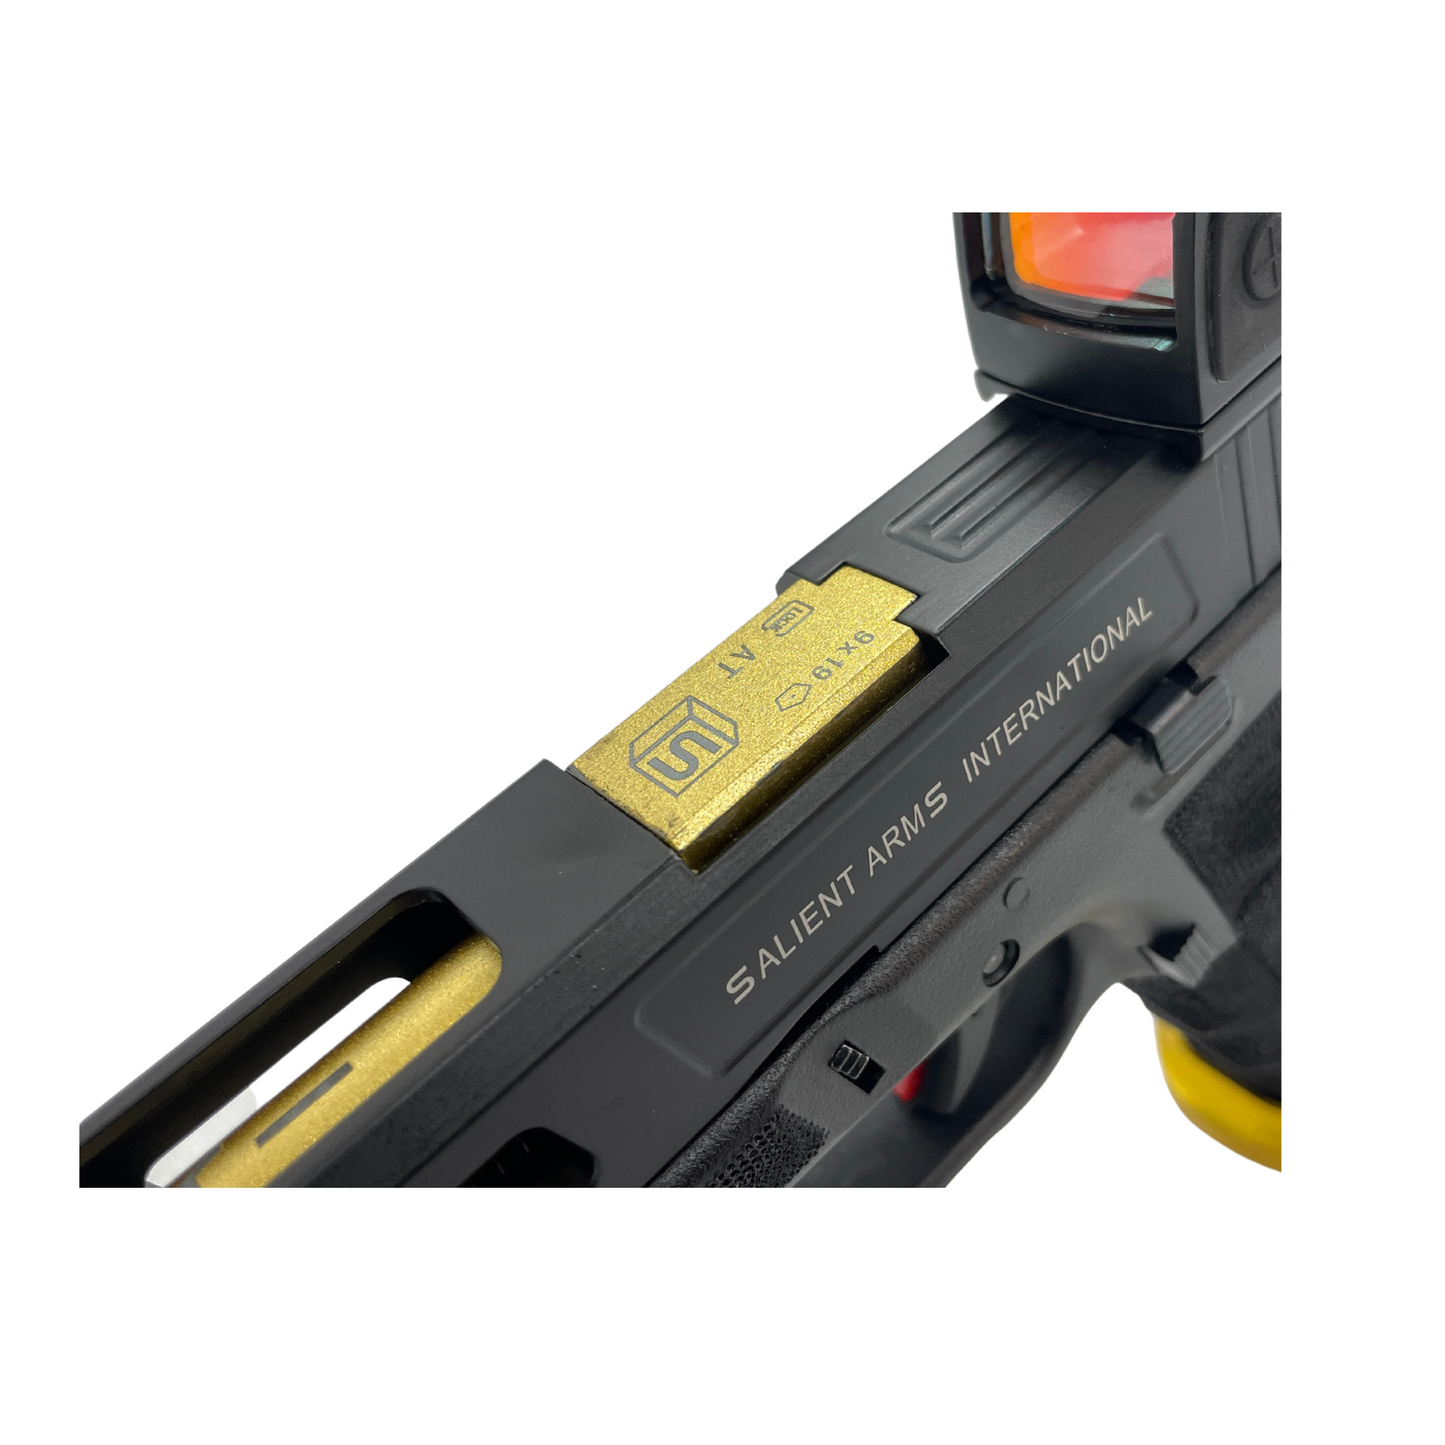 G17 "Salient" Custom Competition Pistol - Gel Blaster